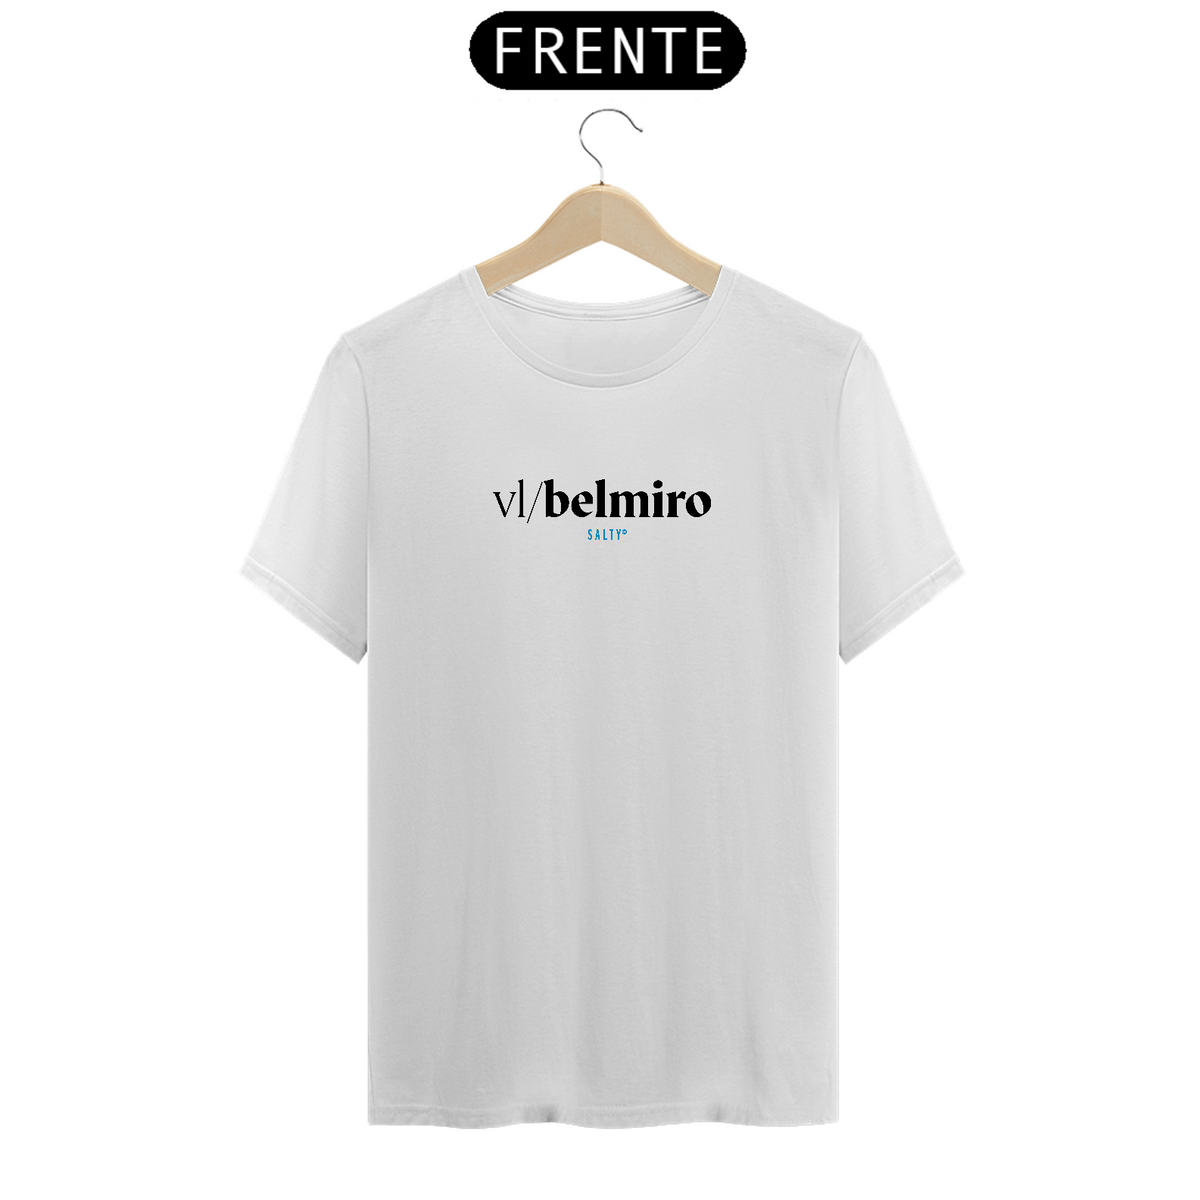 Nome do produto: Camiseta Vl. Belmiro